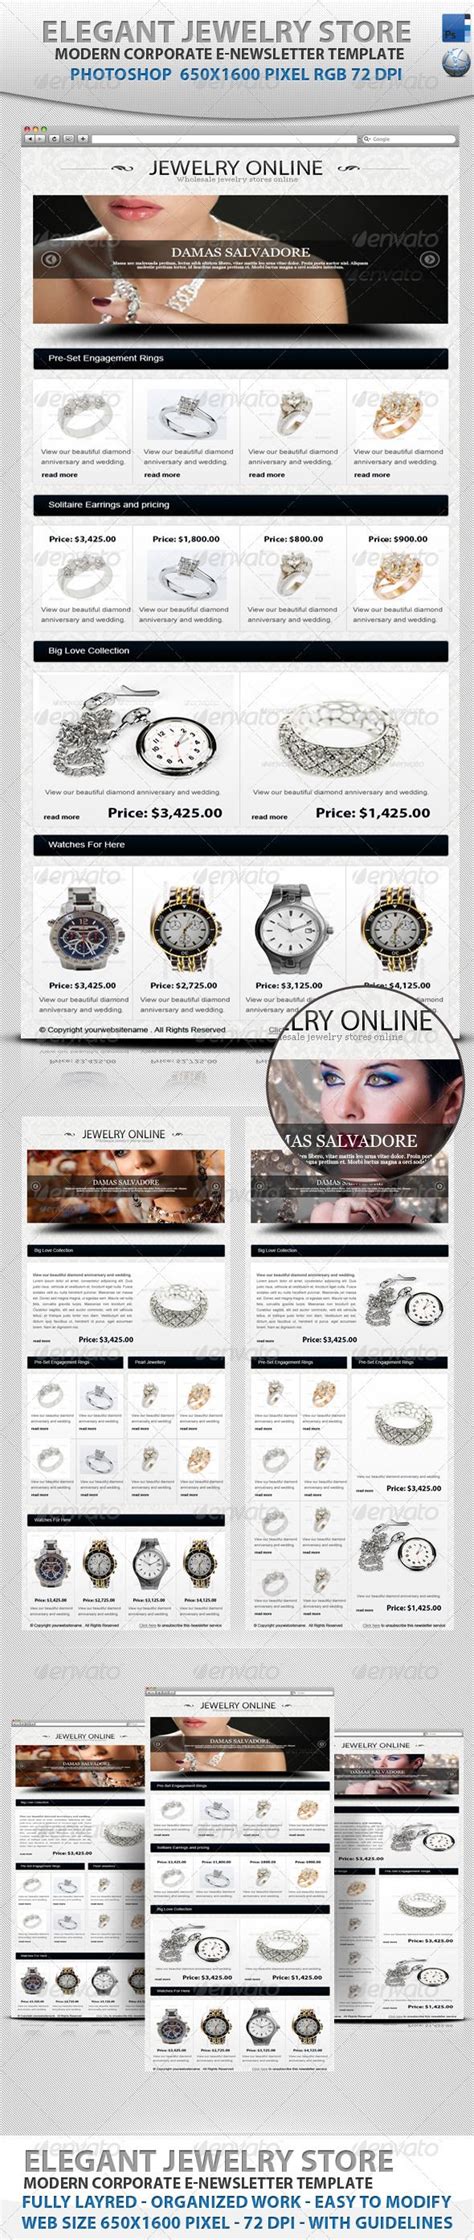 Elegant Jewelry Store E Newsletter Newsletter Templates Template